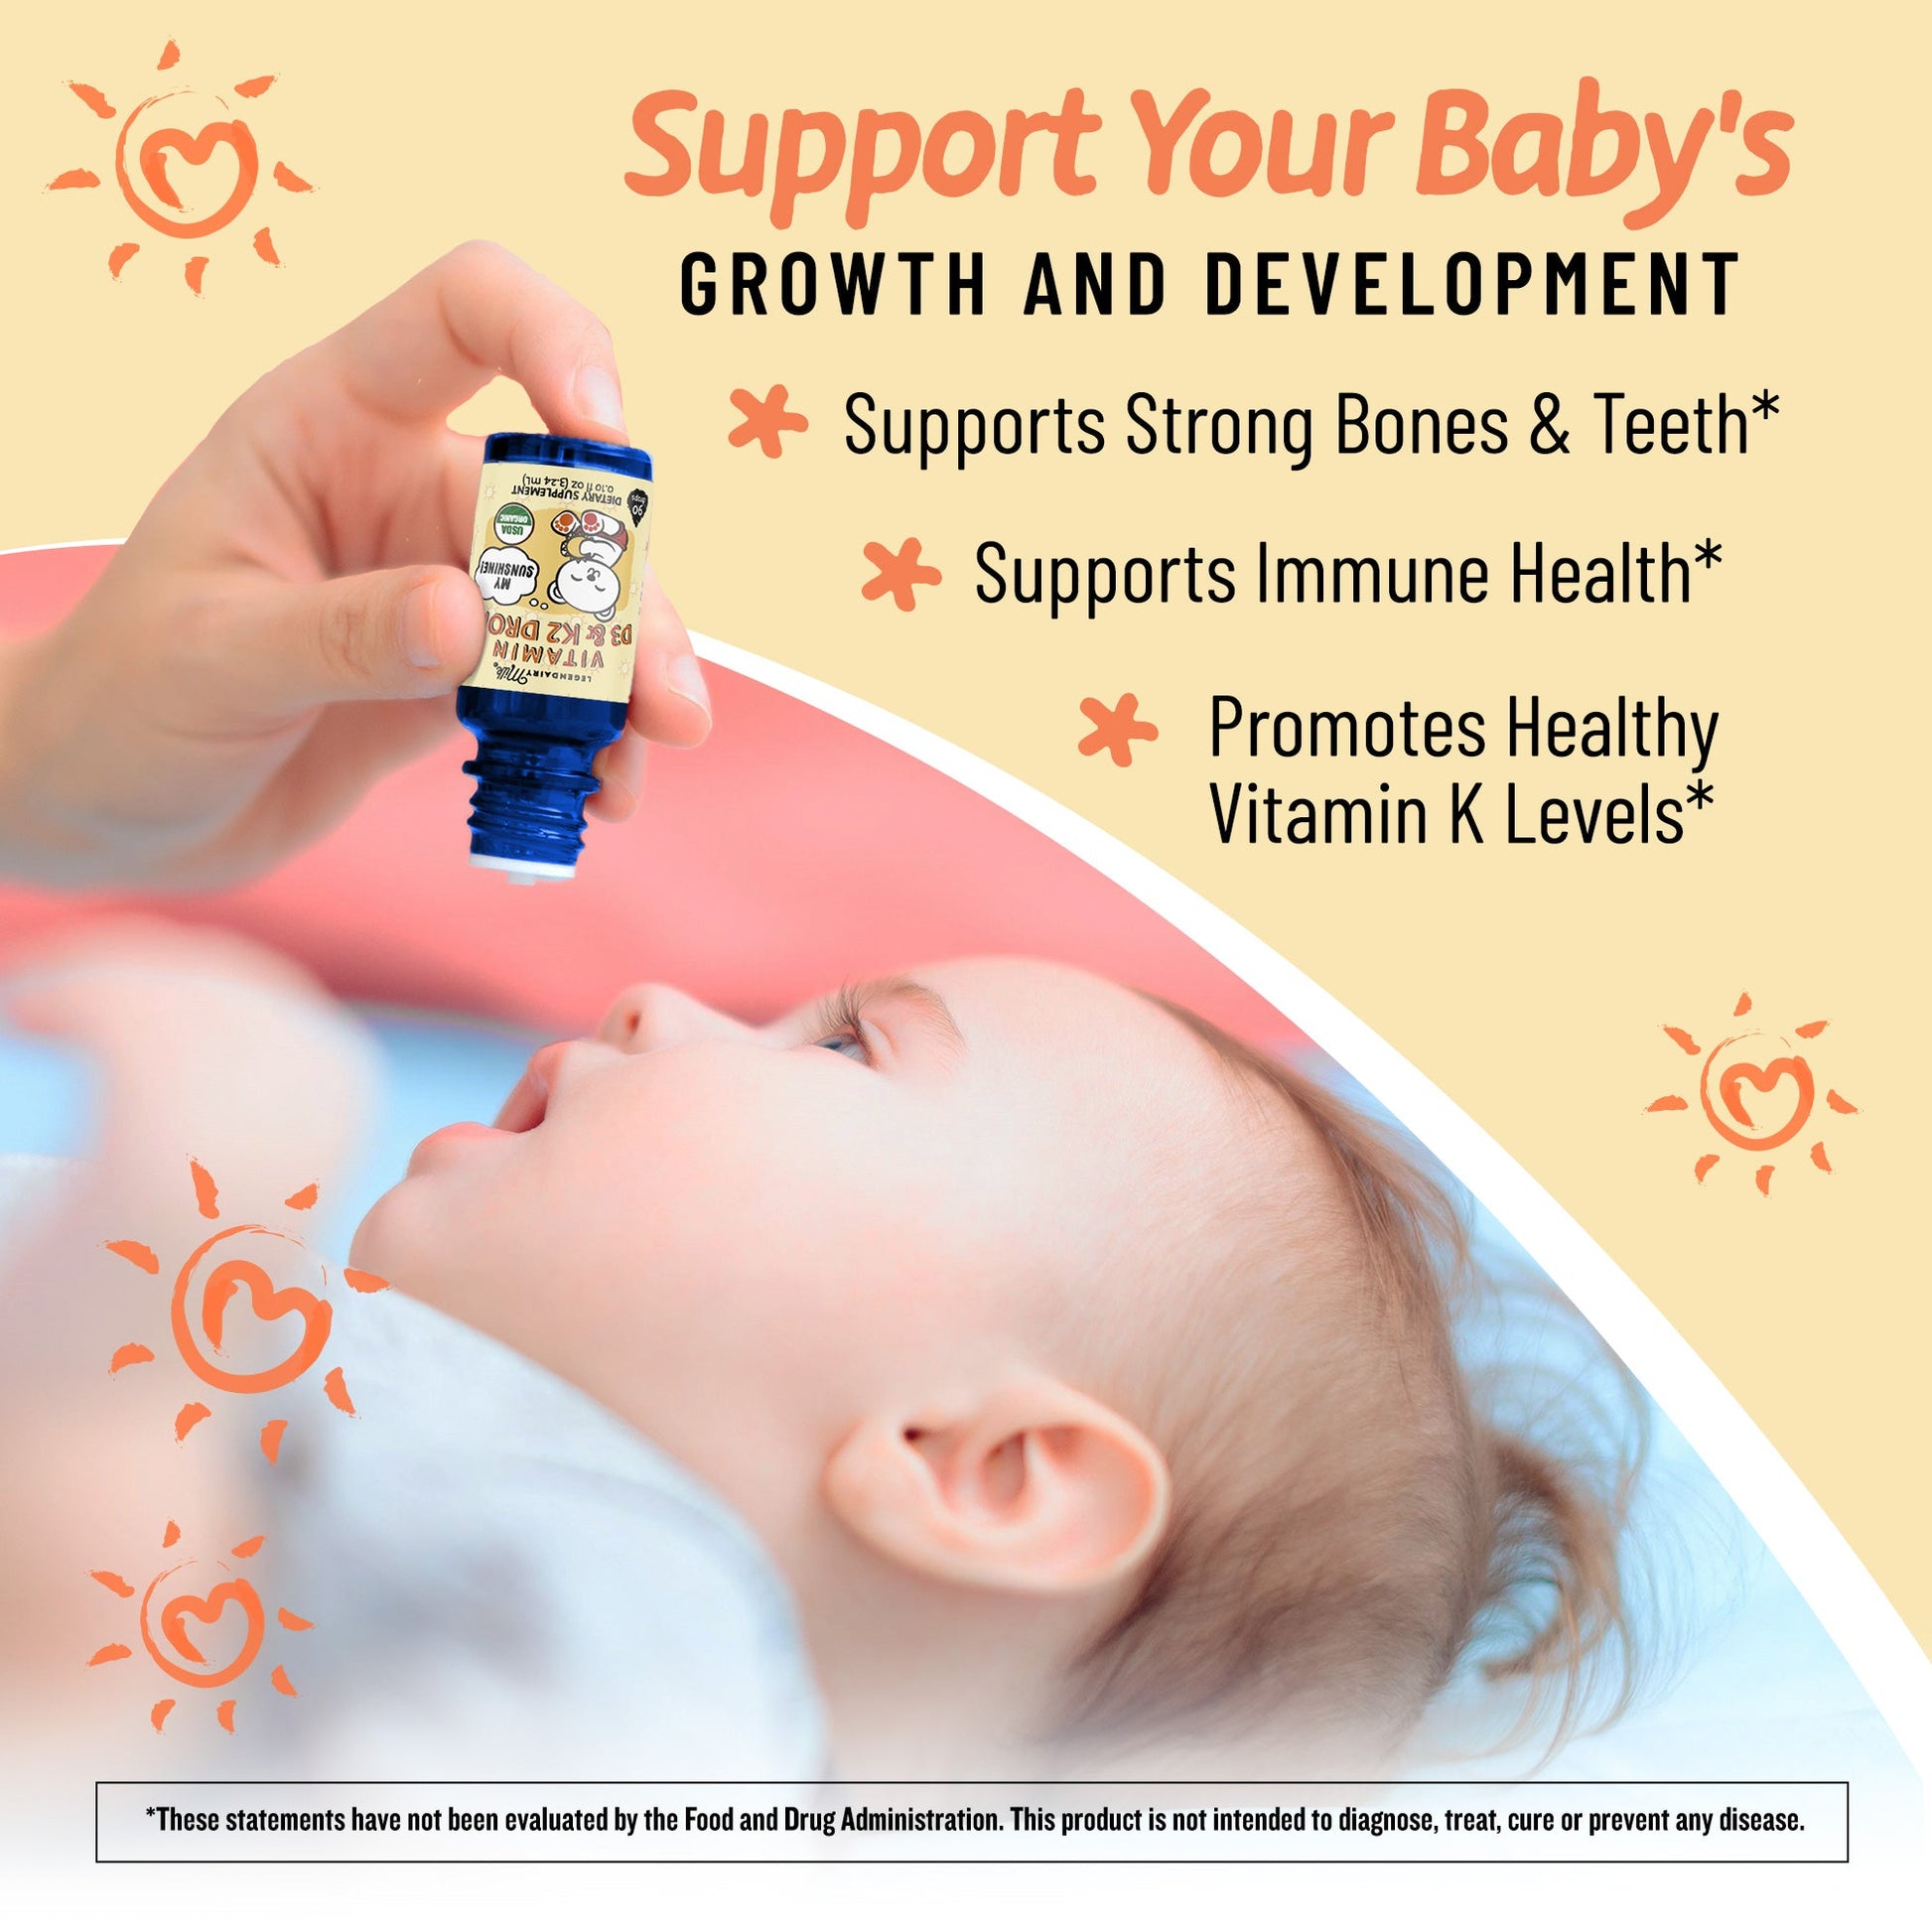 Organic Baby and Toddler D3&K2 Drops - Legendairy Milk